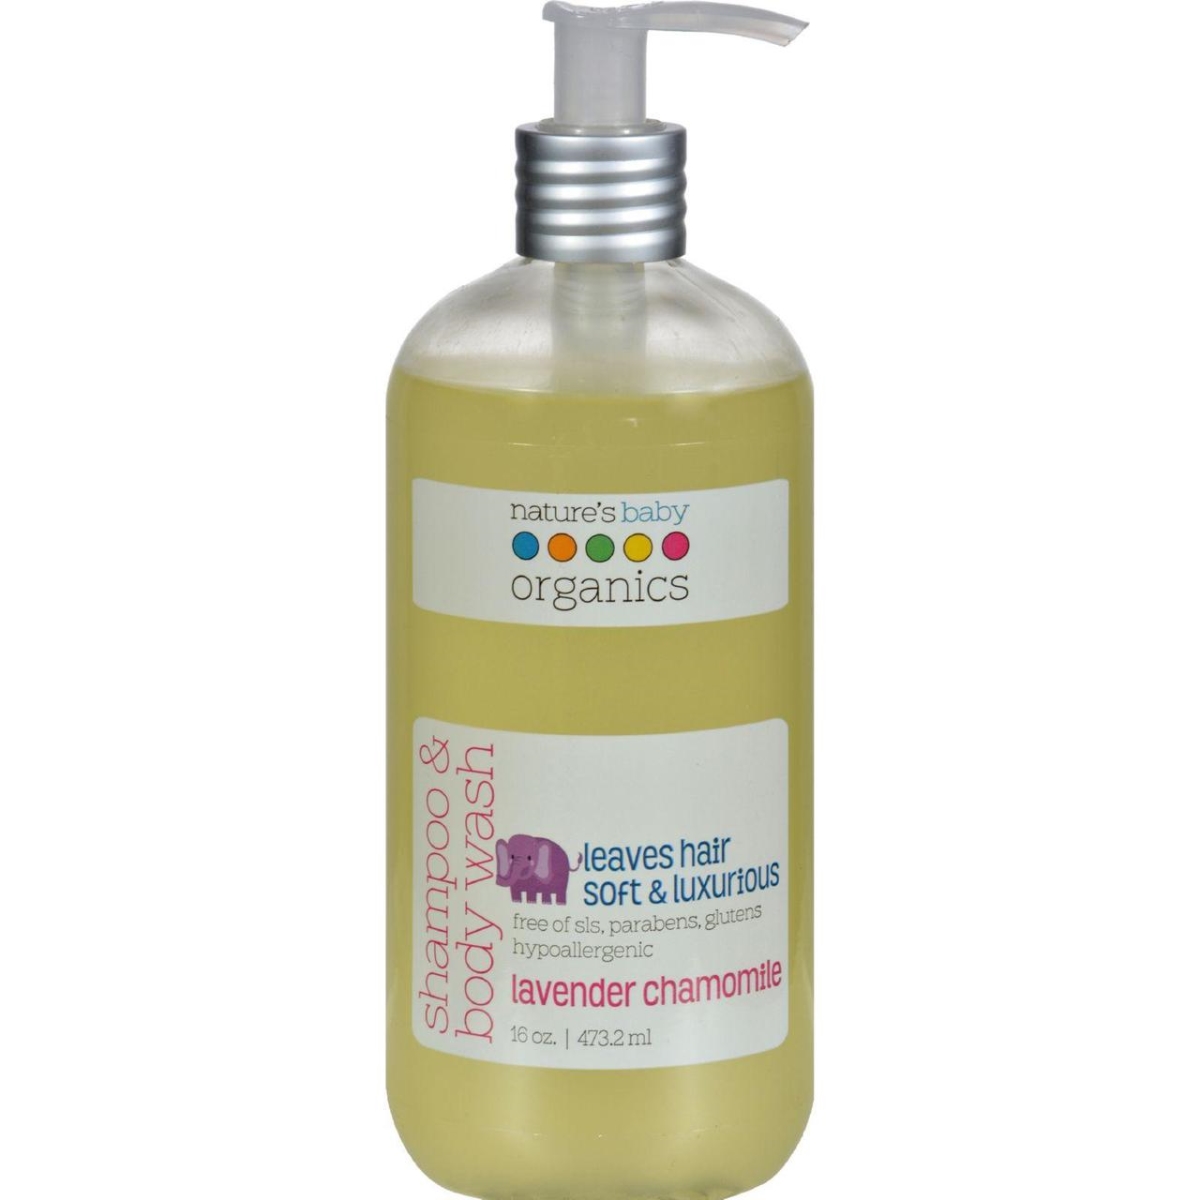 Hg0290486 16 Fl Oz Shampoo & Body Wash Lavender Chamomile